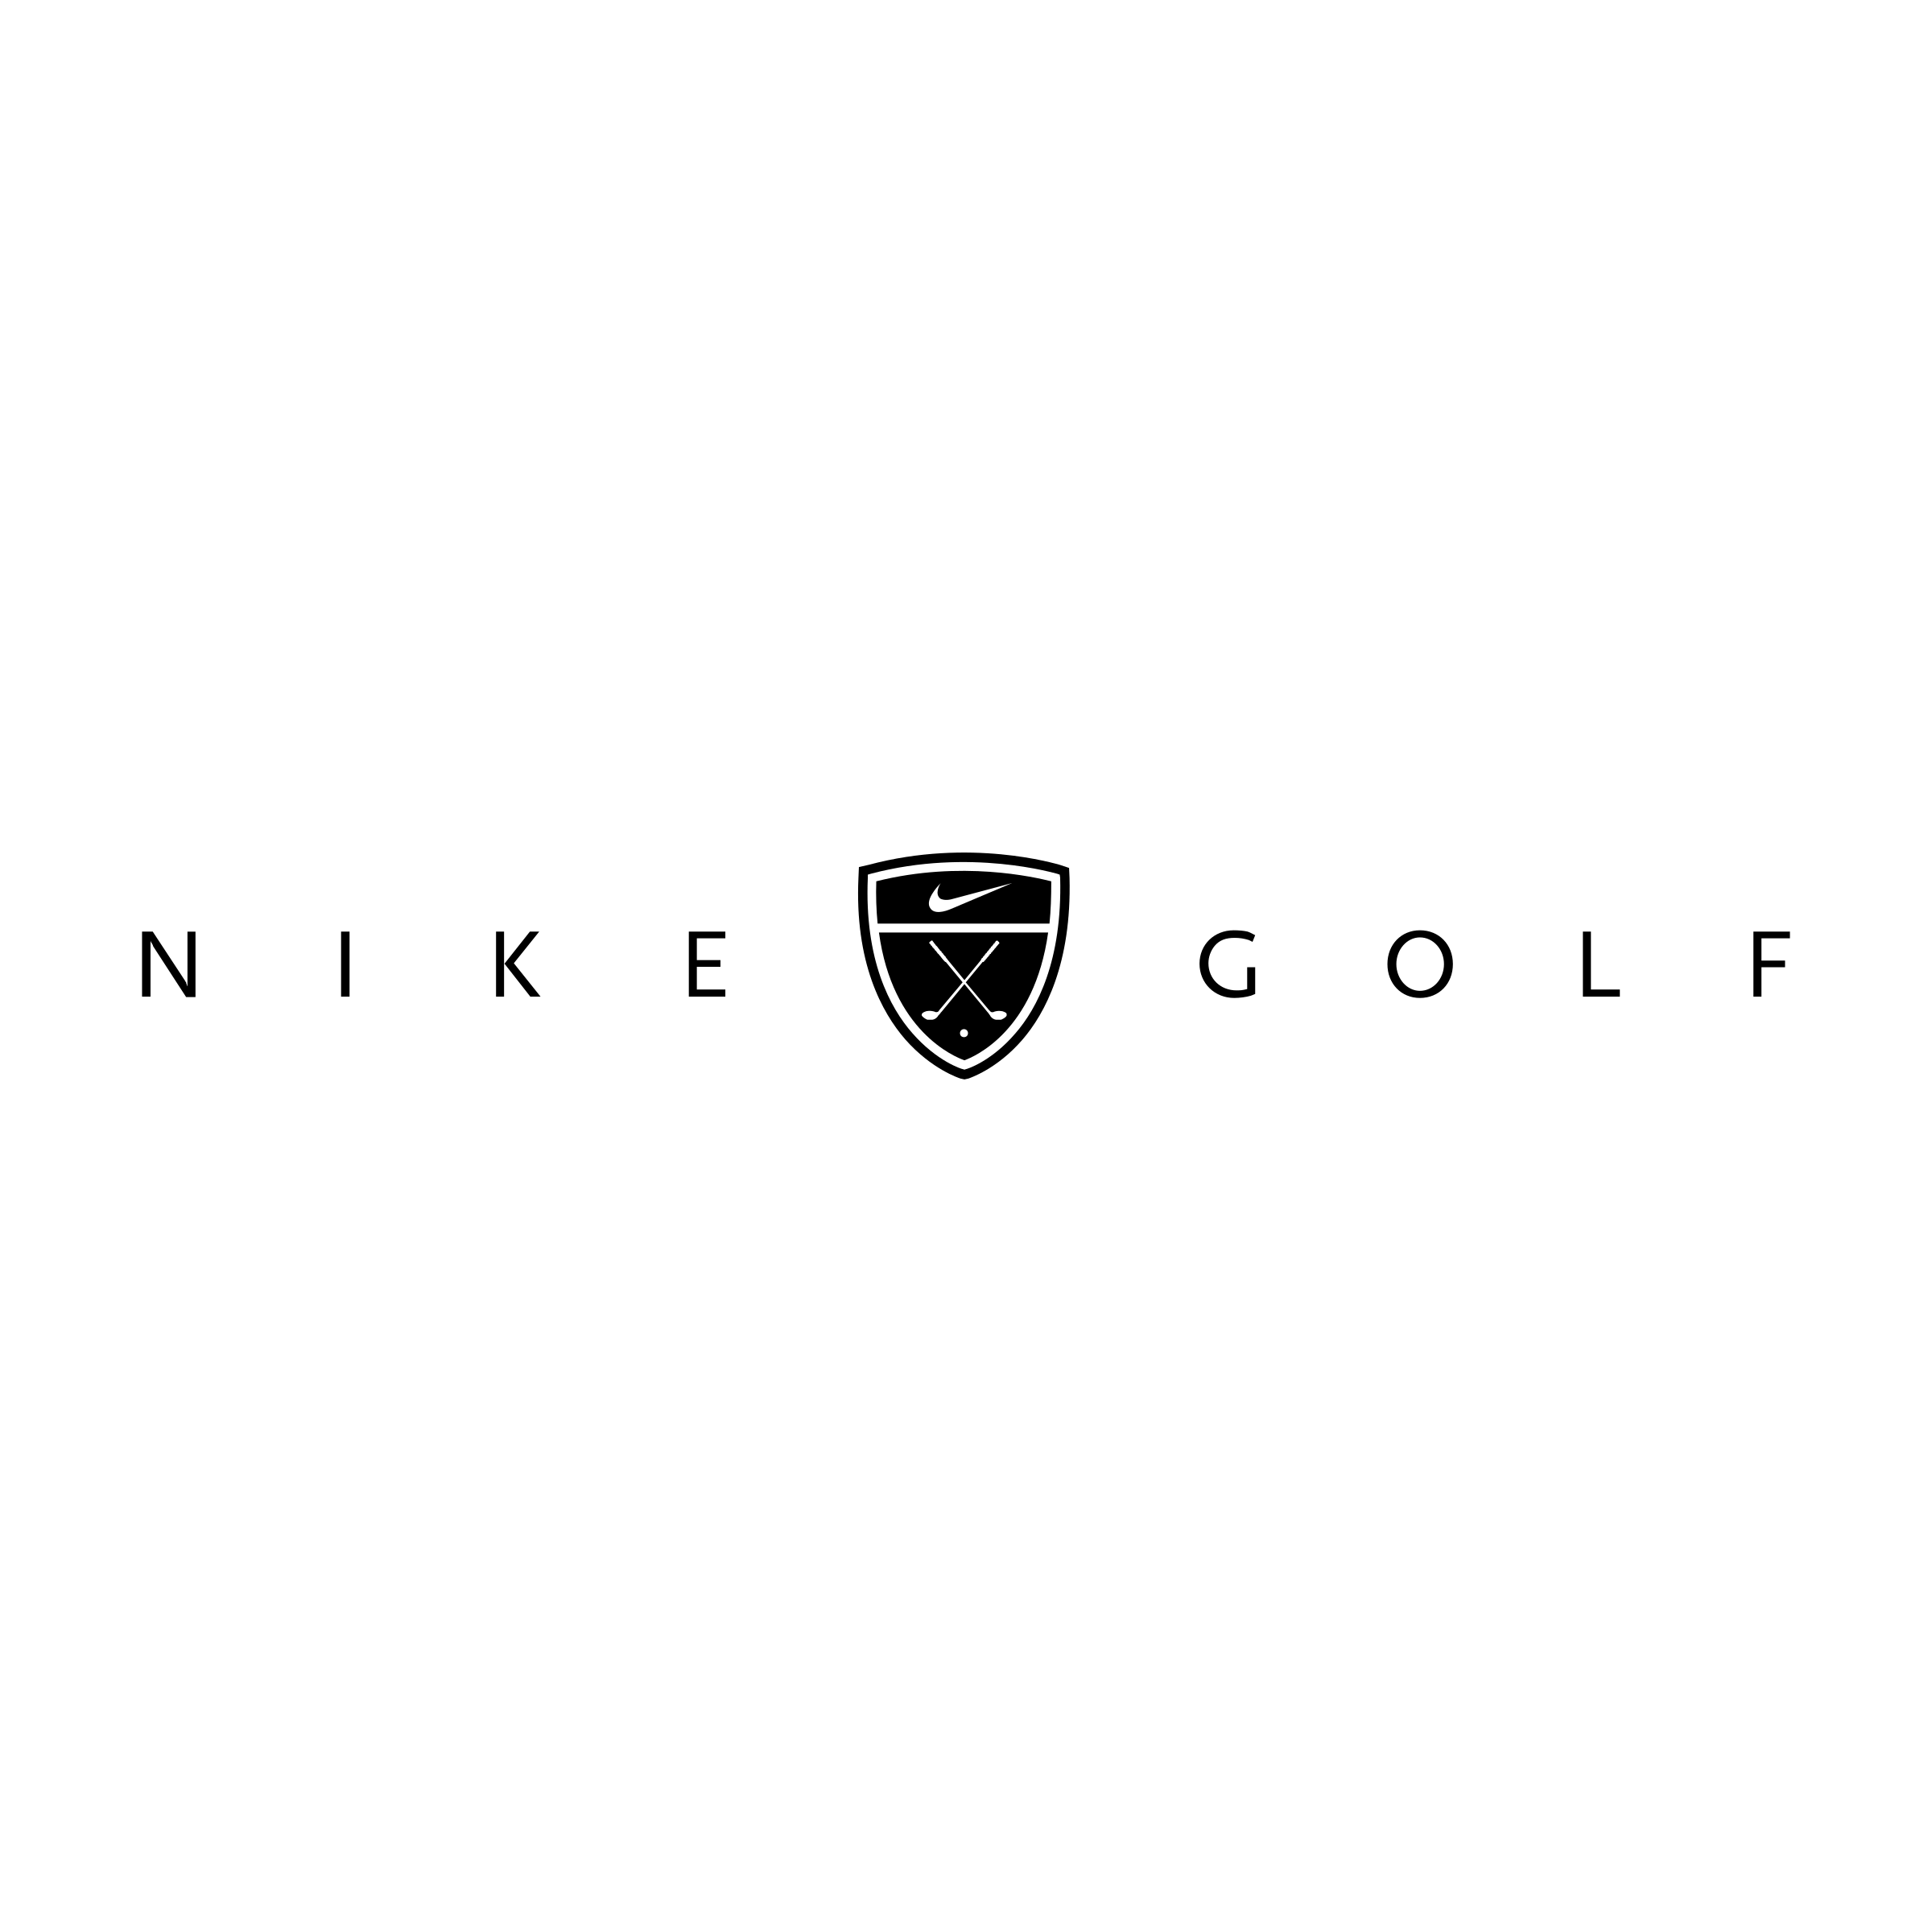 Nike Golf Logo - Nike Golf Logo PNG Transparent & SVG Vector - Freebie Supply